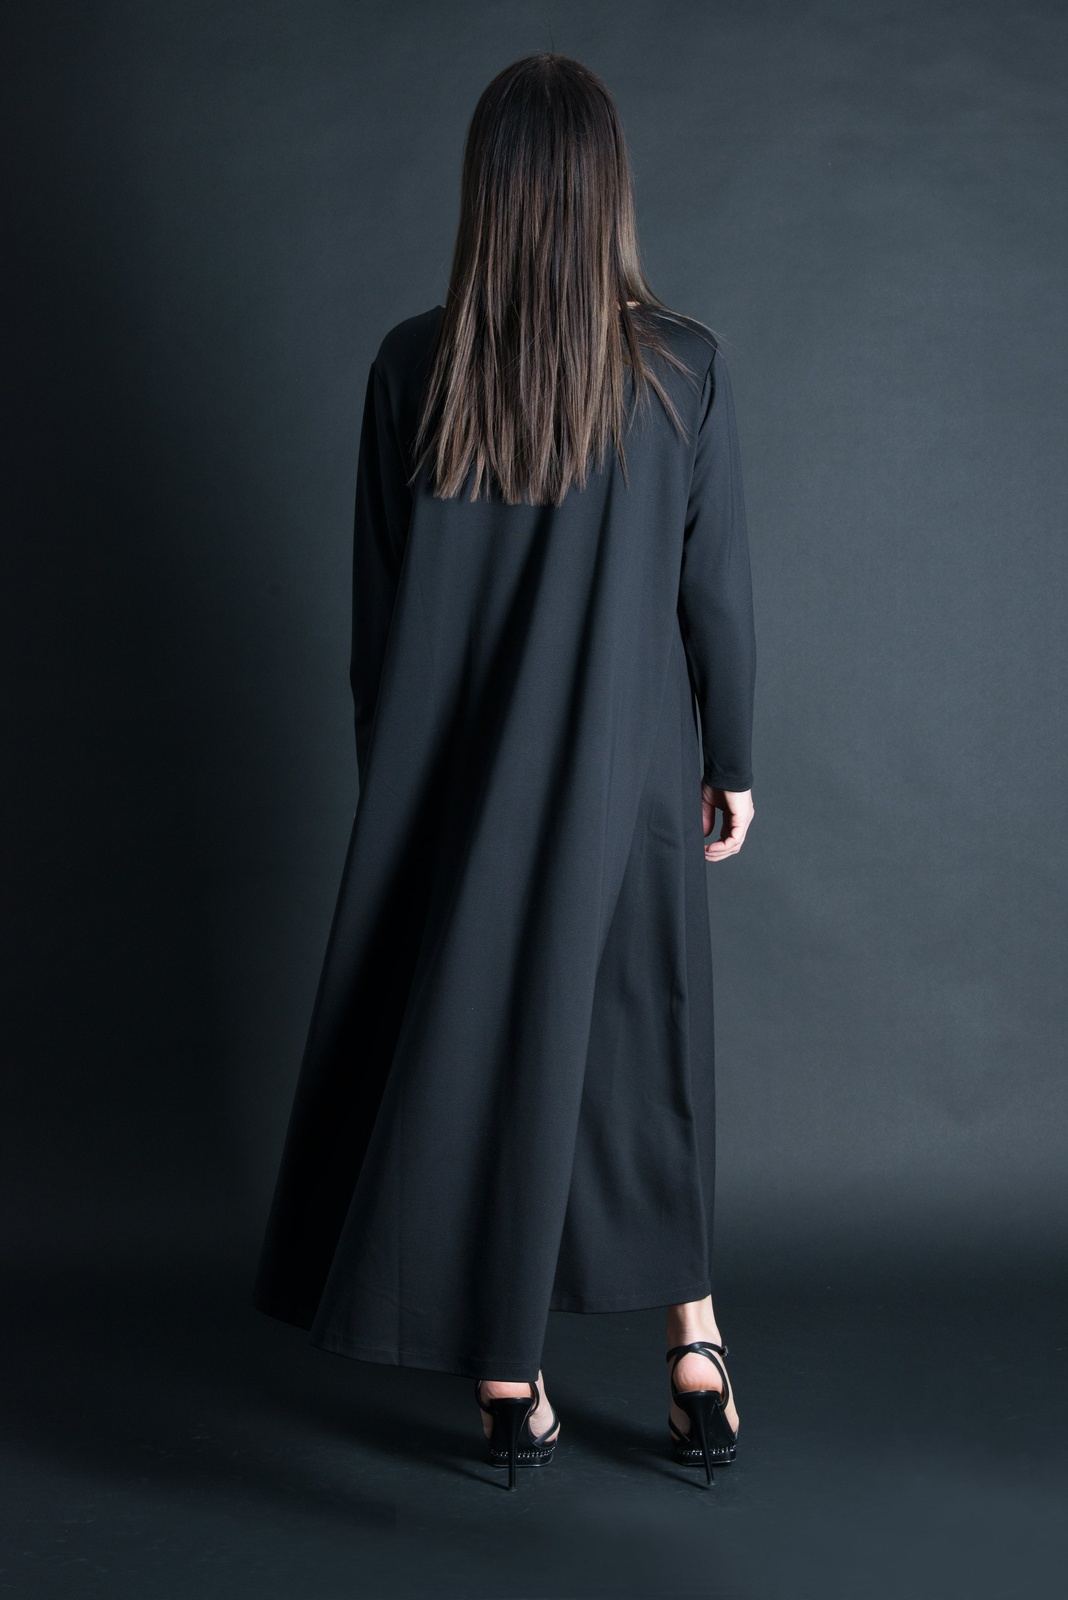 A Line Black Print Face woman Long Dress